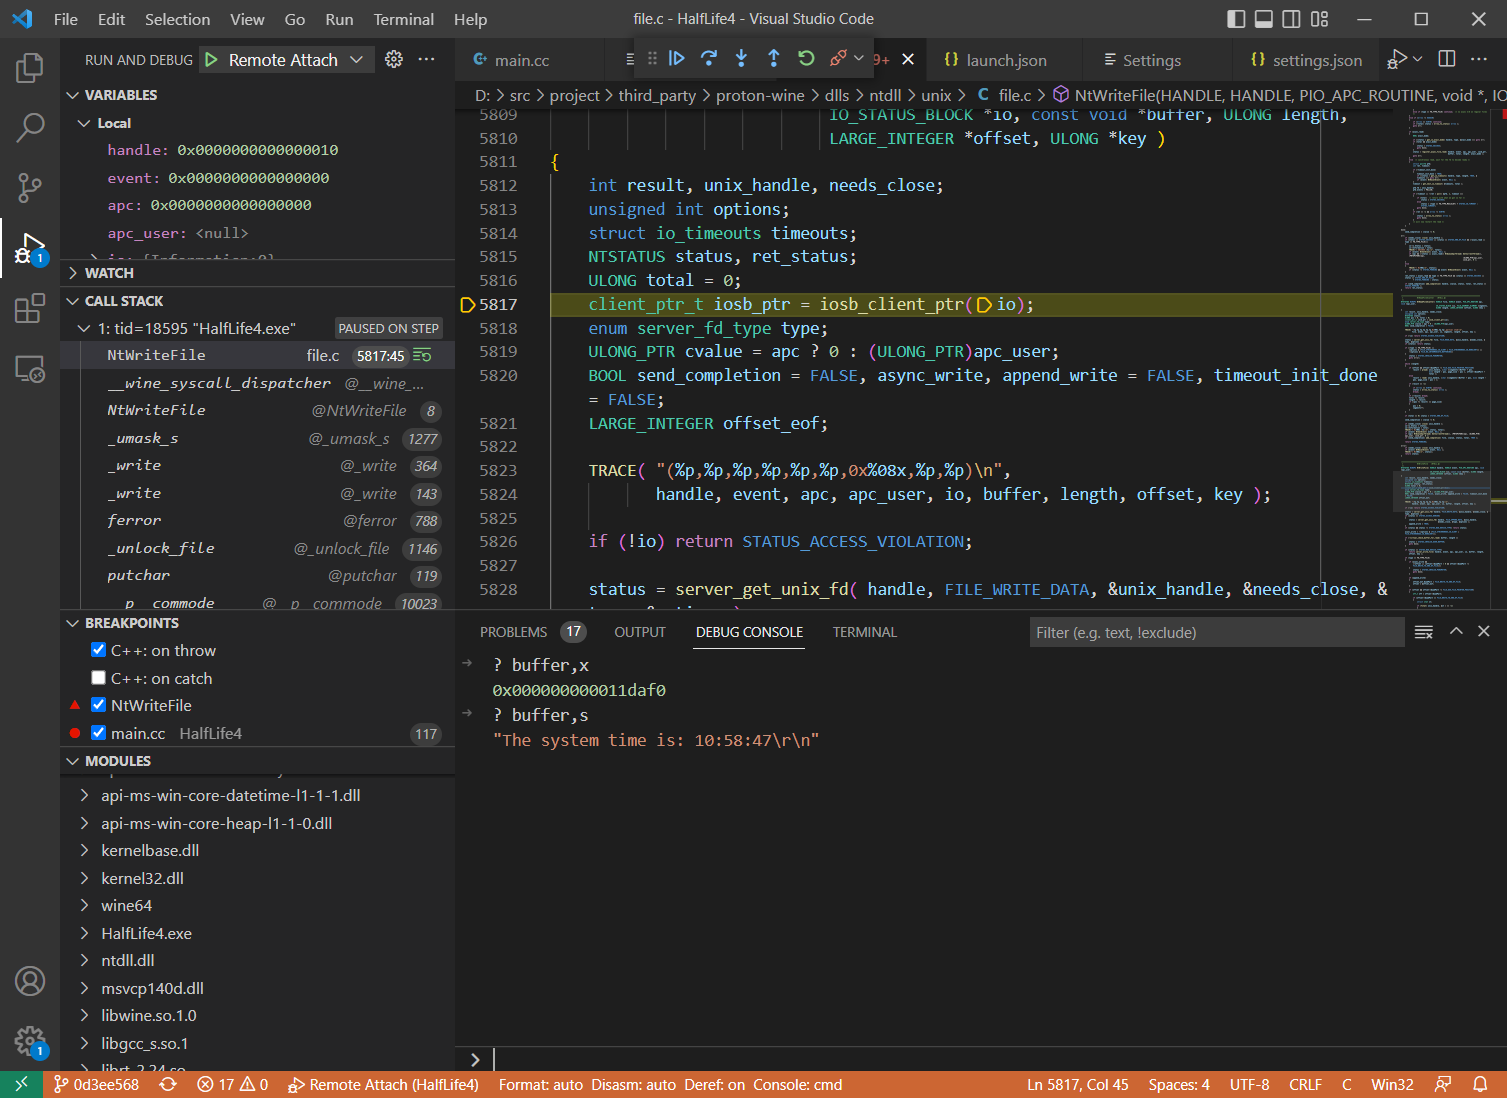 Visual Studio Code inside the syscall